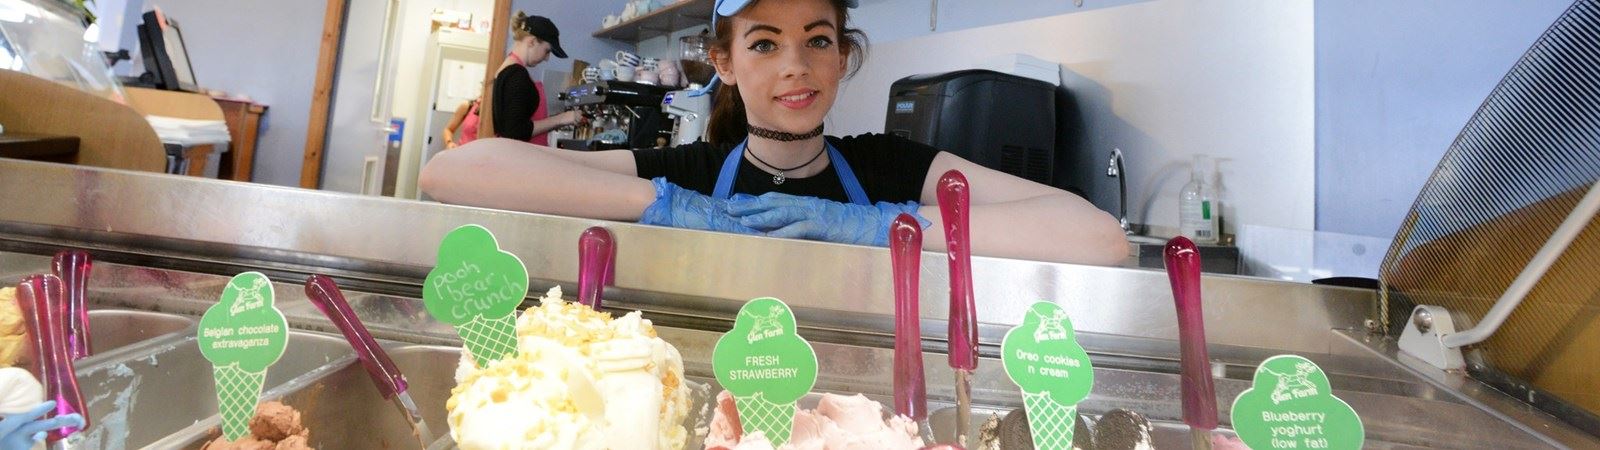 Milkbarn Ice Cream Parlour, Falkirk|Icecream|Things to do in Falkirk